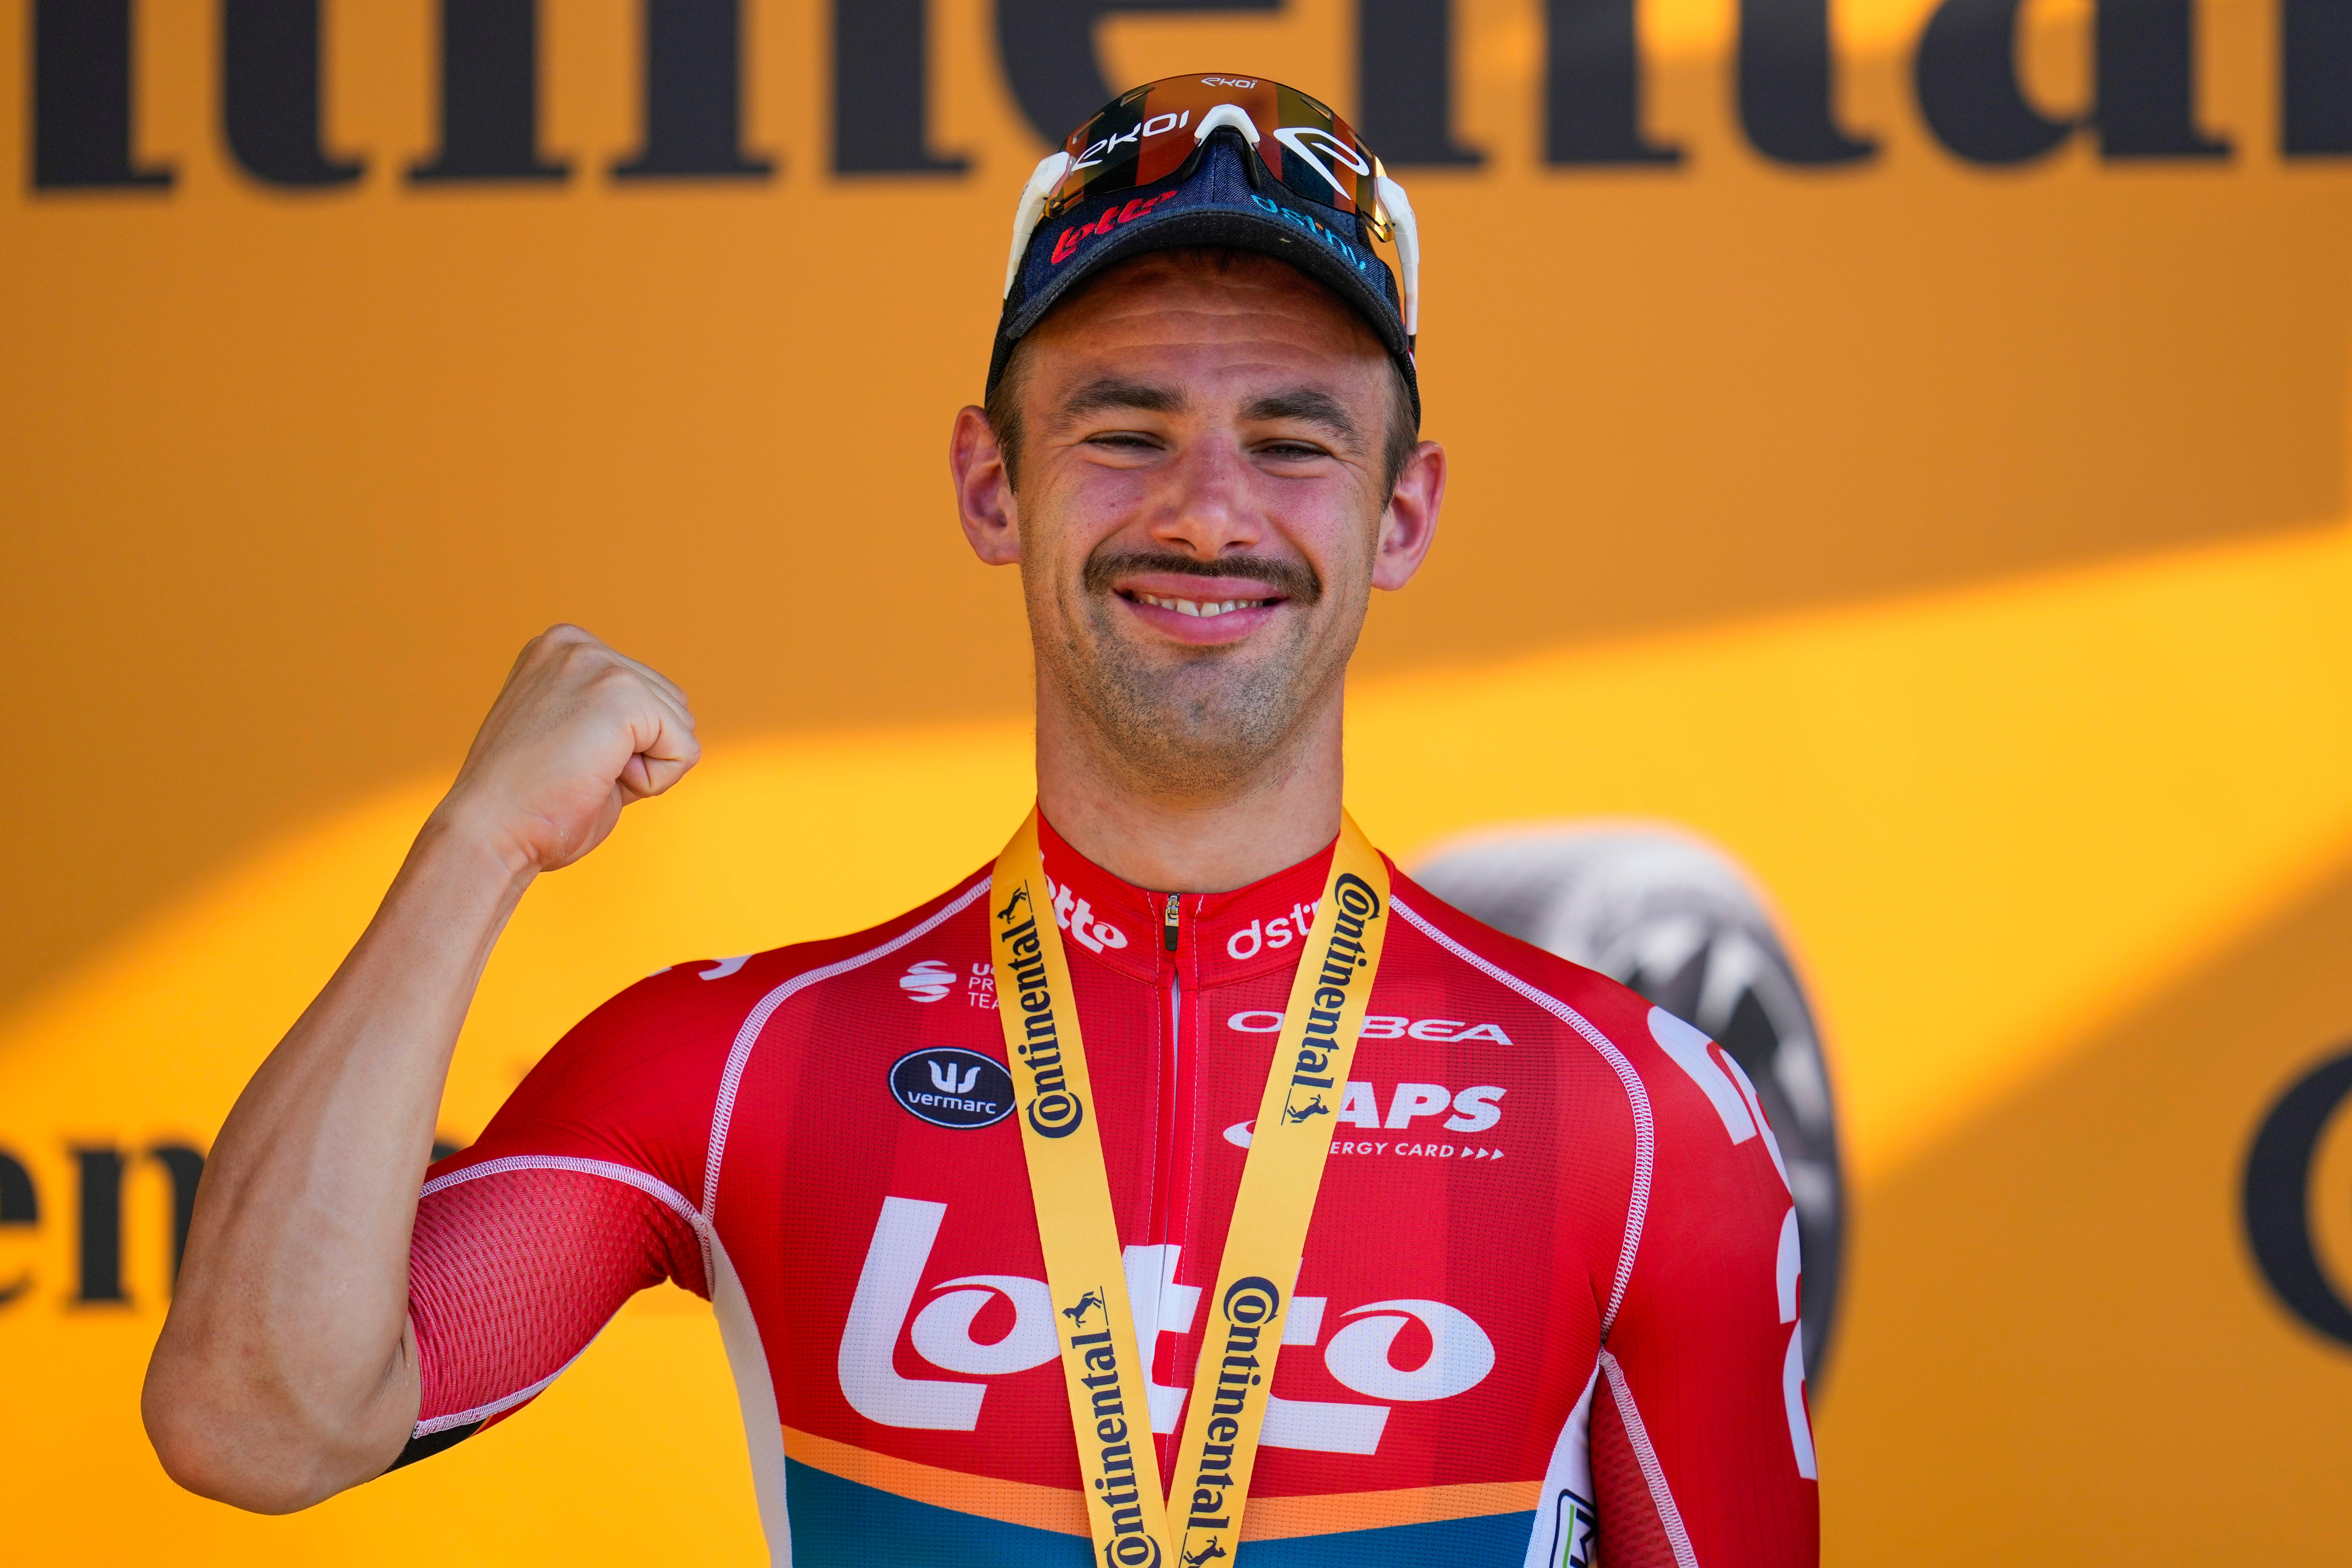 Victor Campenaerts celebrates winning stage 18